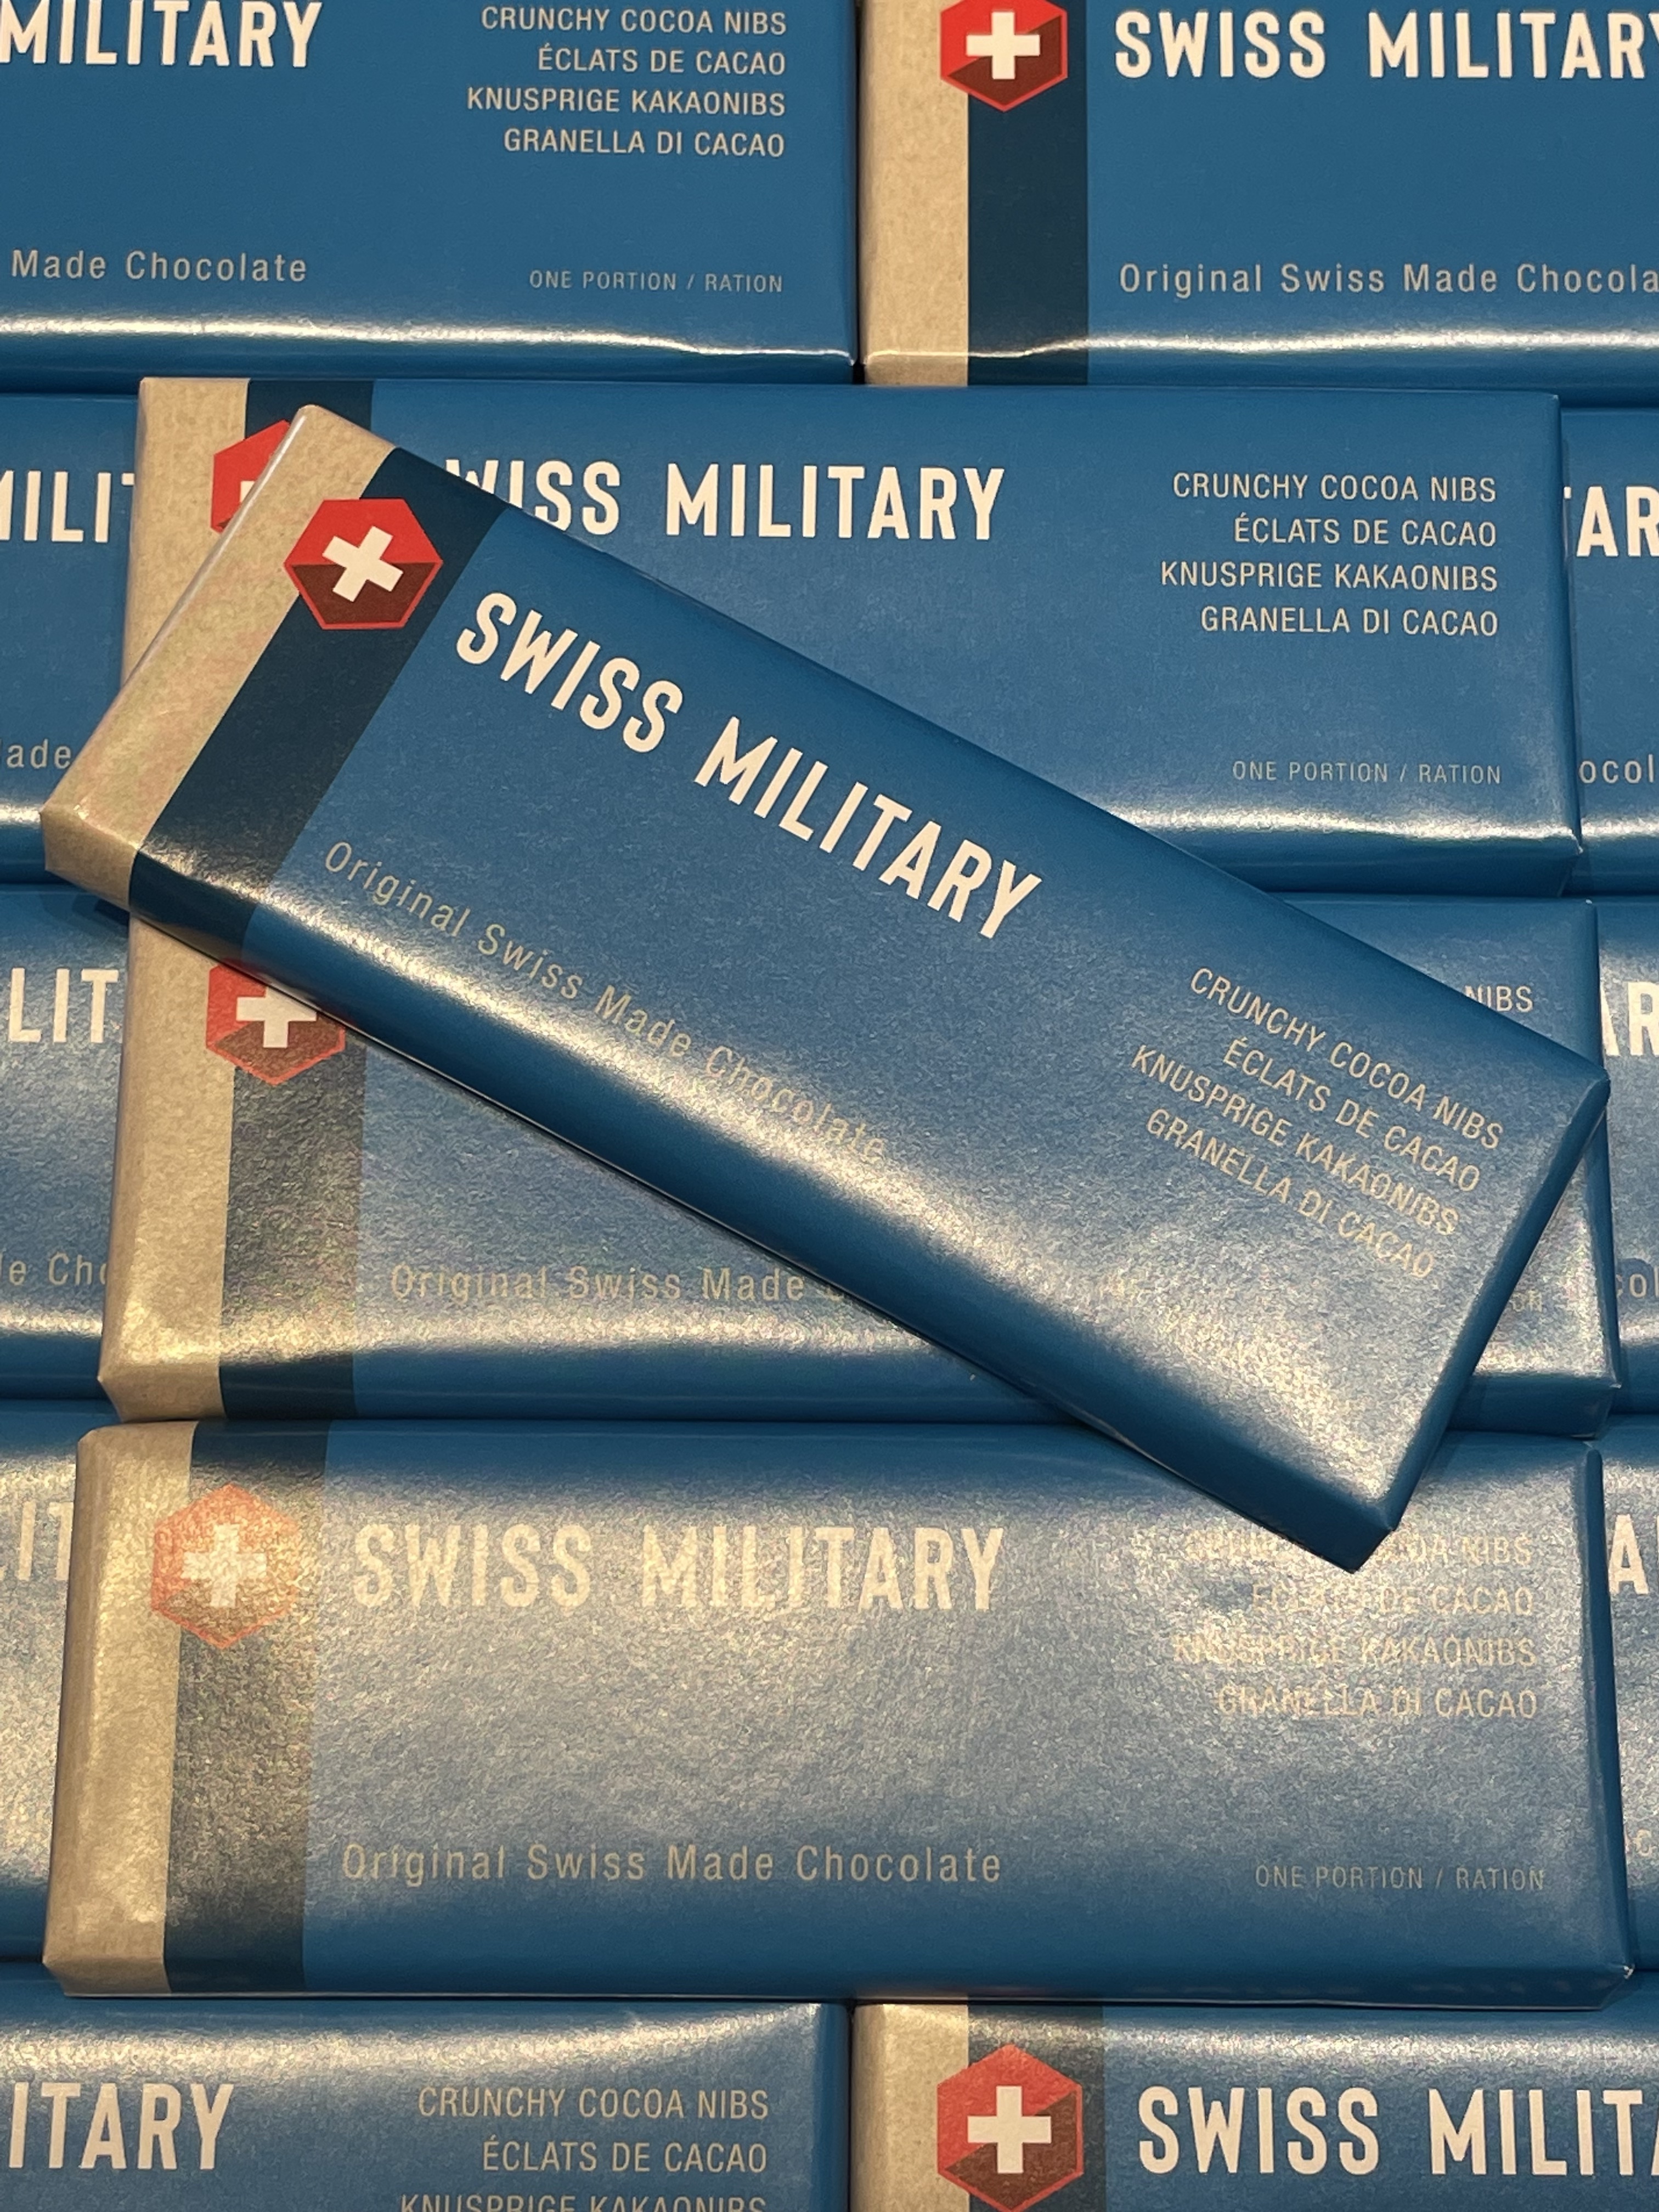 Swiss Military Crunchy Cocoa Nibs